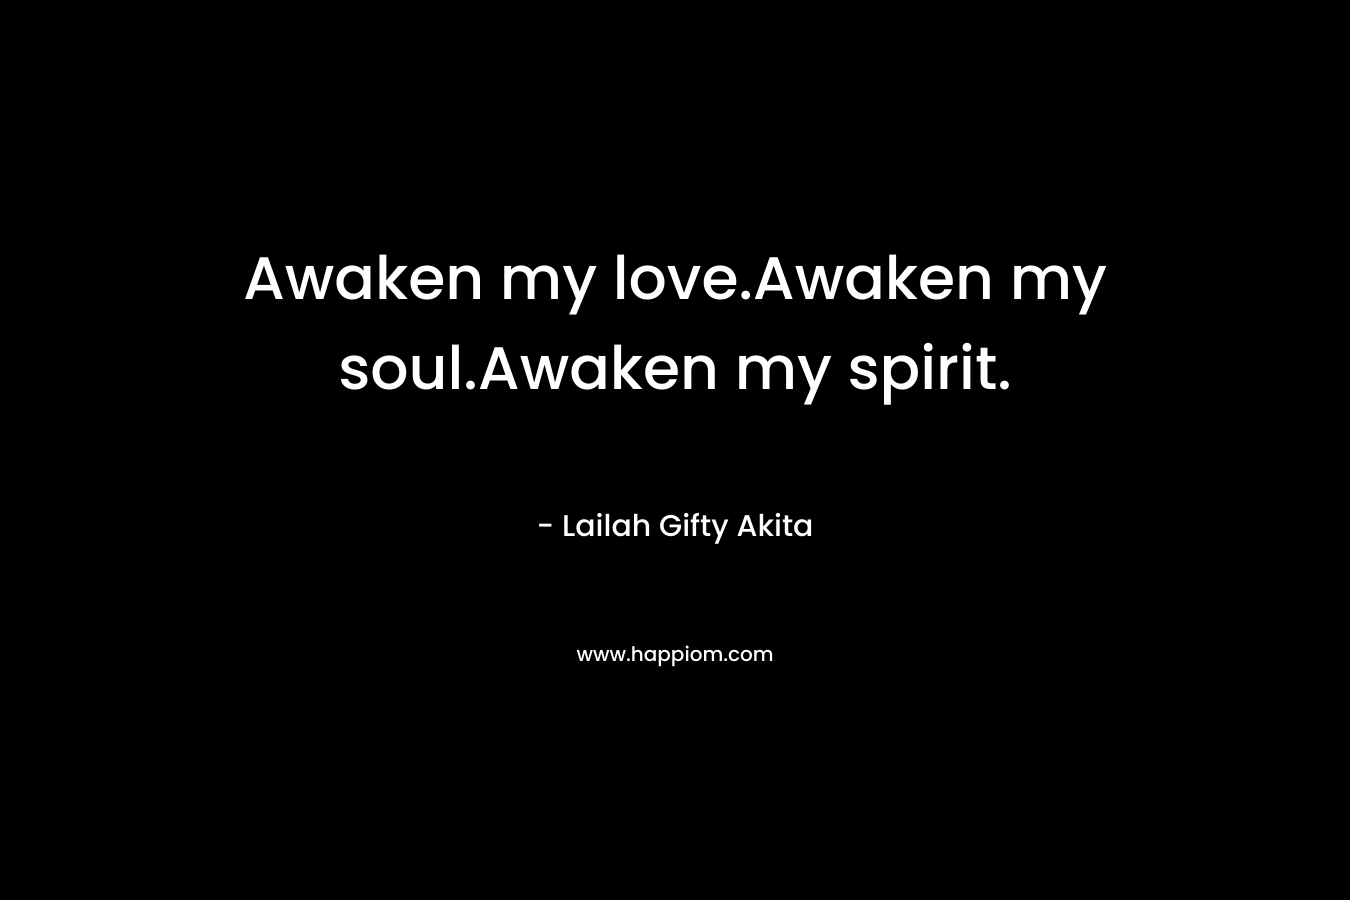 Awaken my love.Awaken my soul.Awaken my spirit.